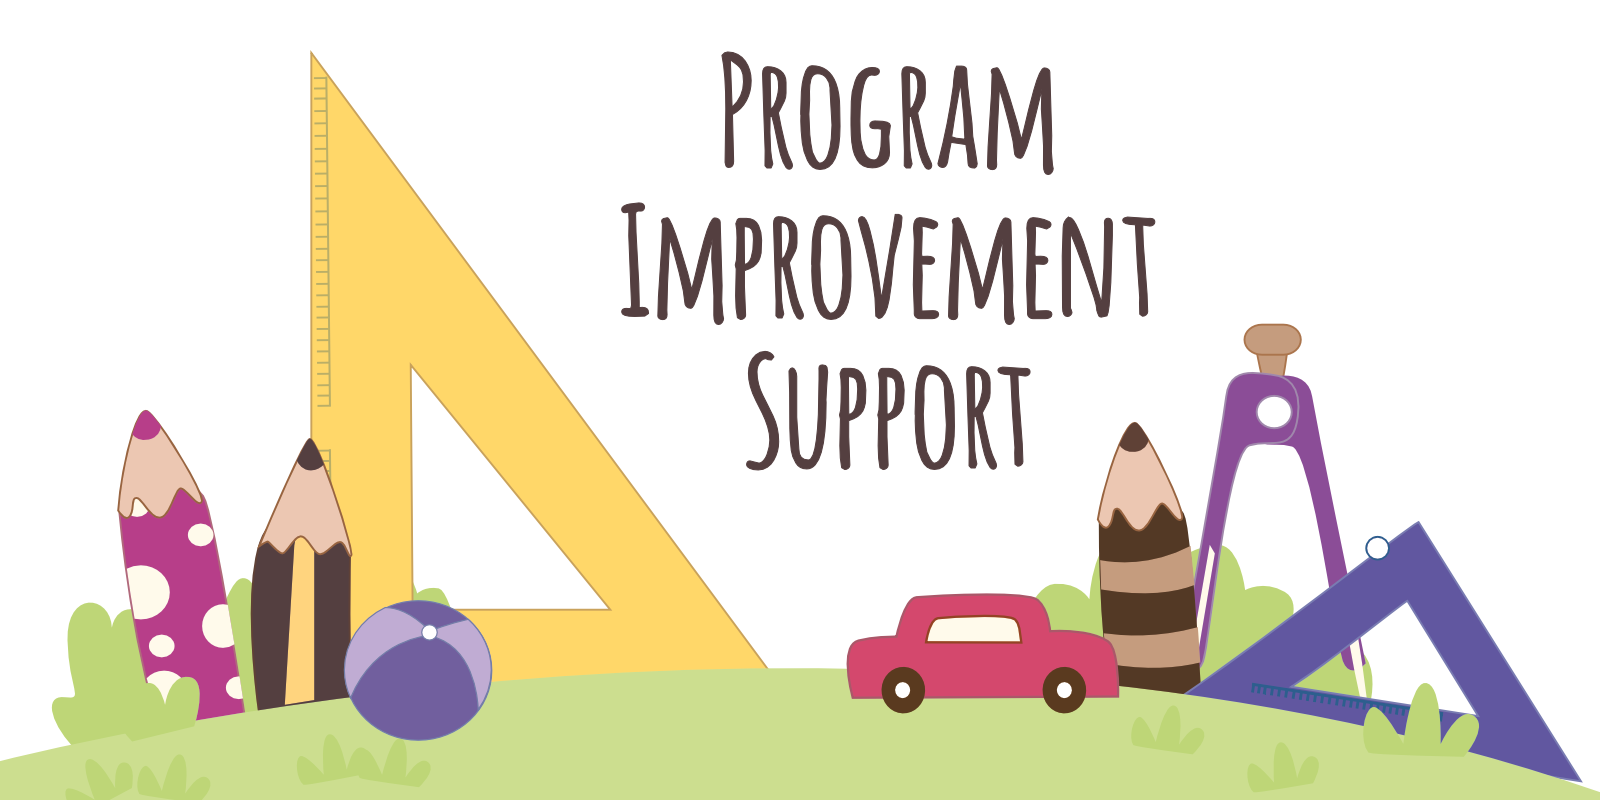 Program Improvement Support